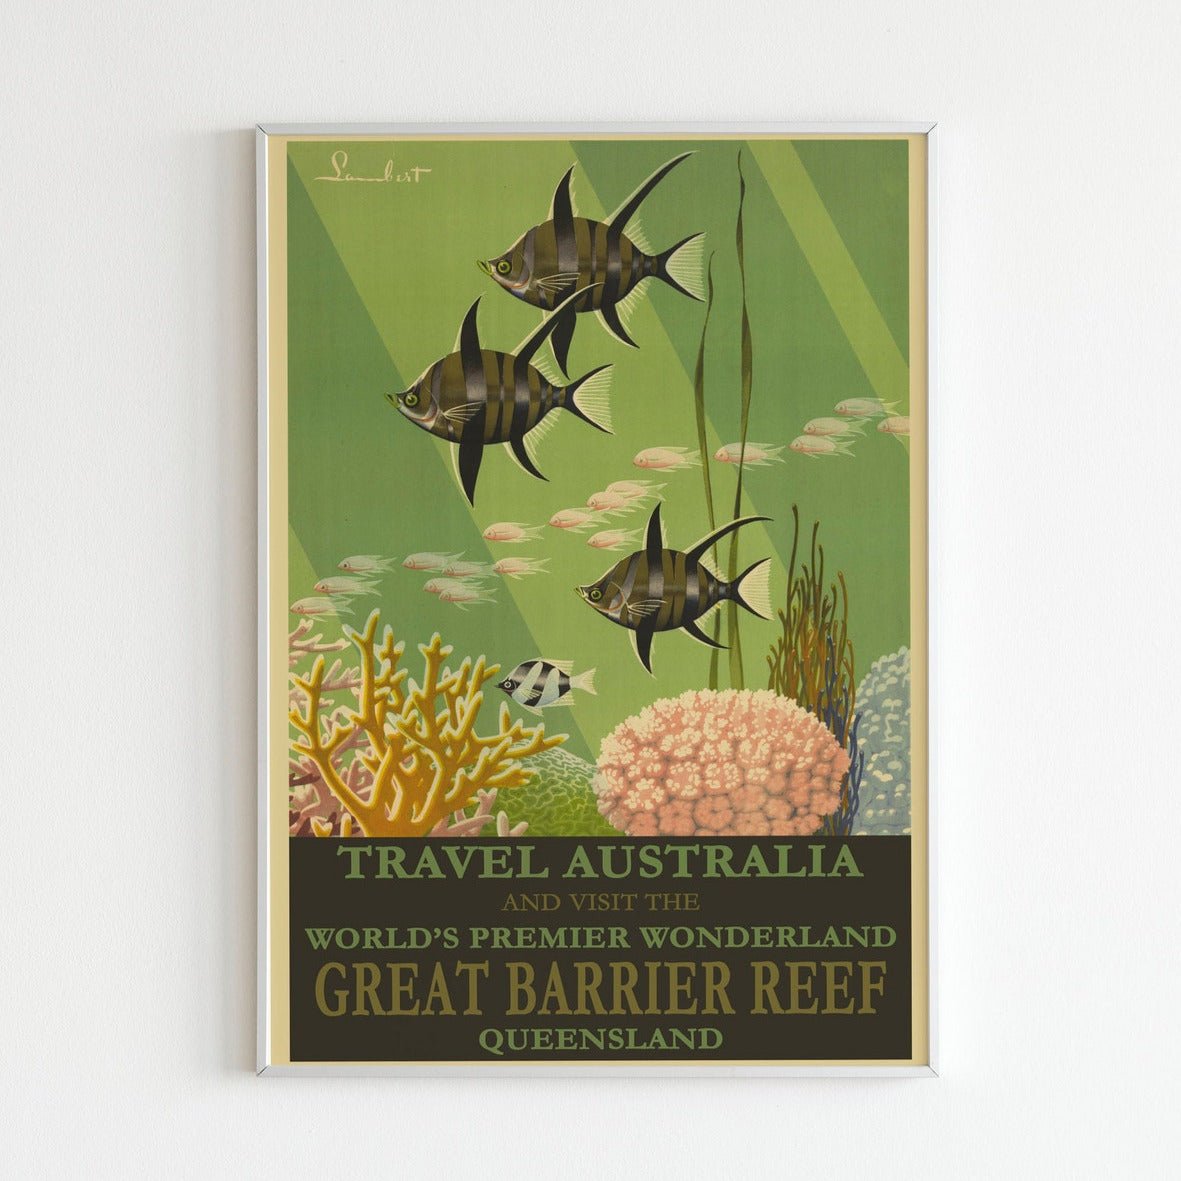 Great Barrier Reef - Vintages Australien-Reiseplakat